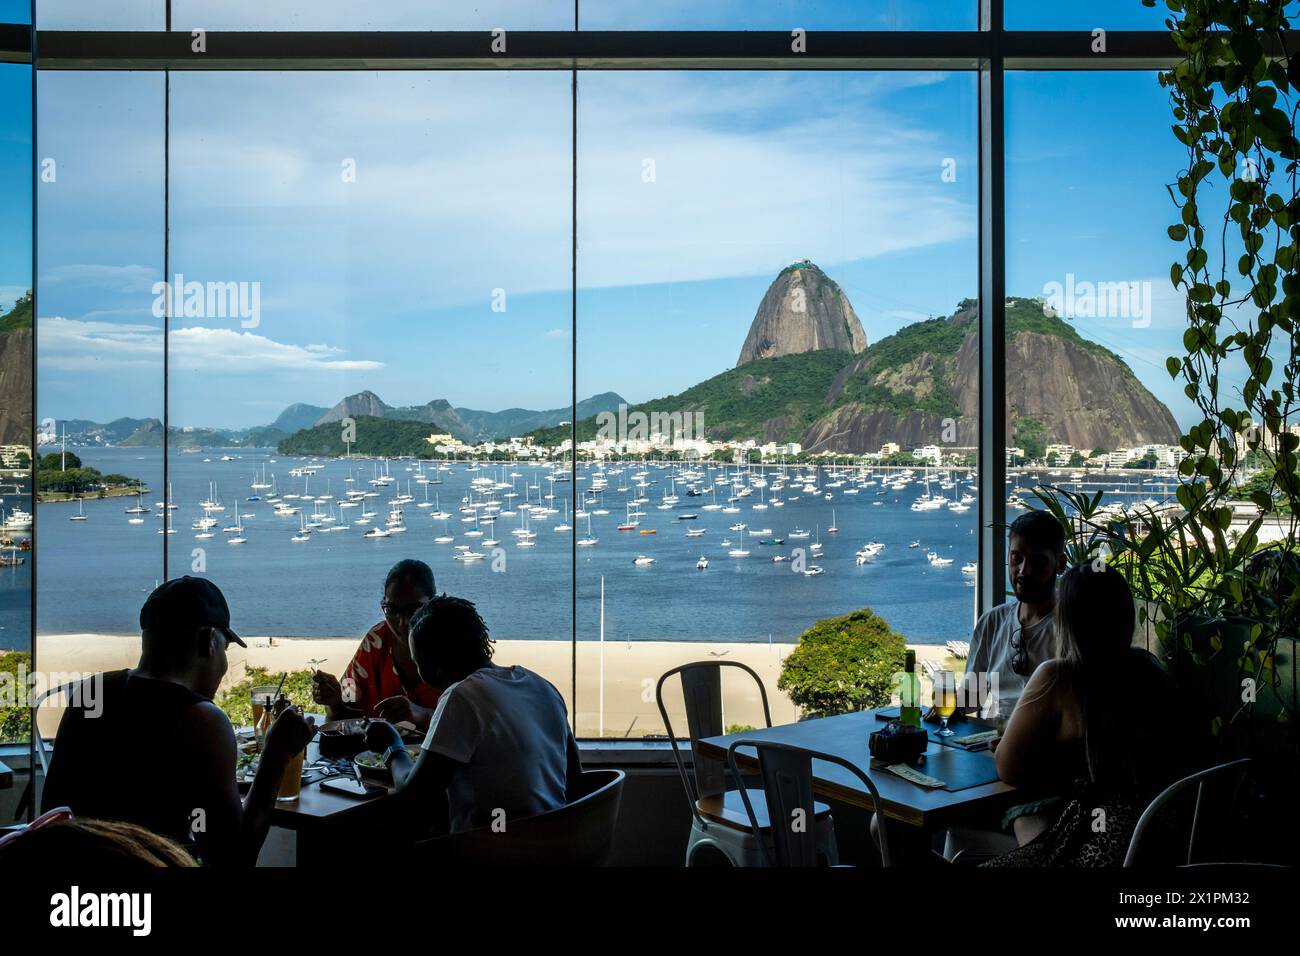 Views of Botafogo Bay and Sugarloaf Mountain From The Cafe at The Botafogo Praia Shopping Centre, Rio de Janeiro, Brasil. Stock Photo